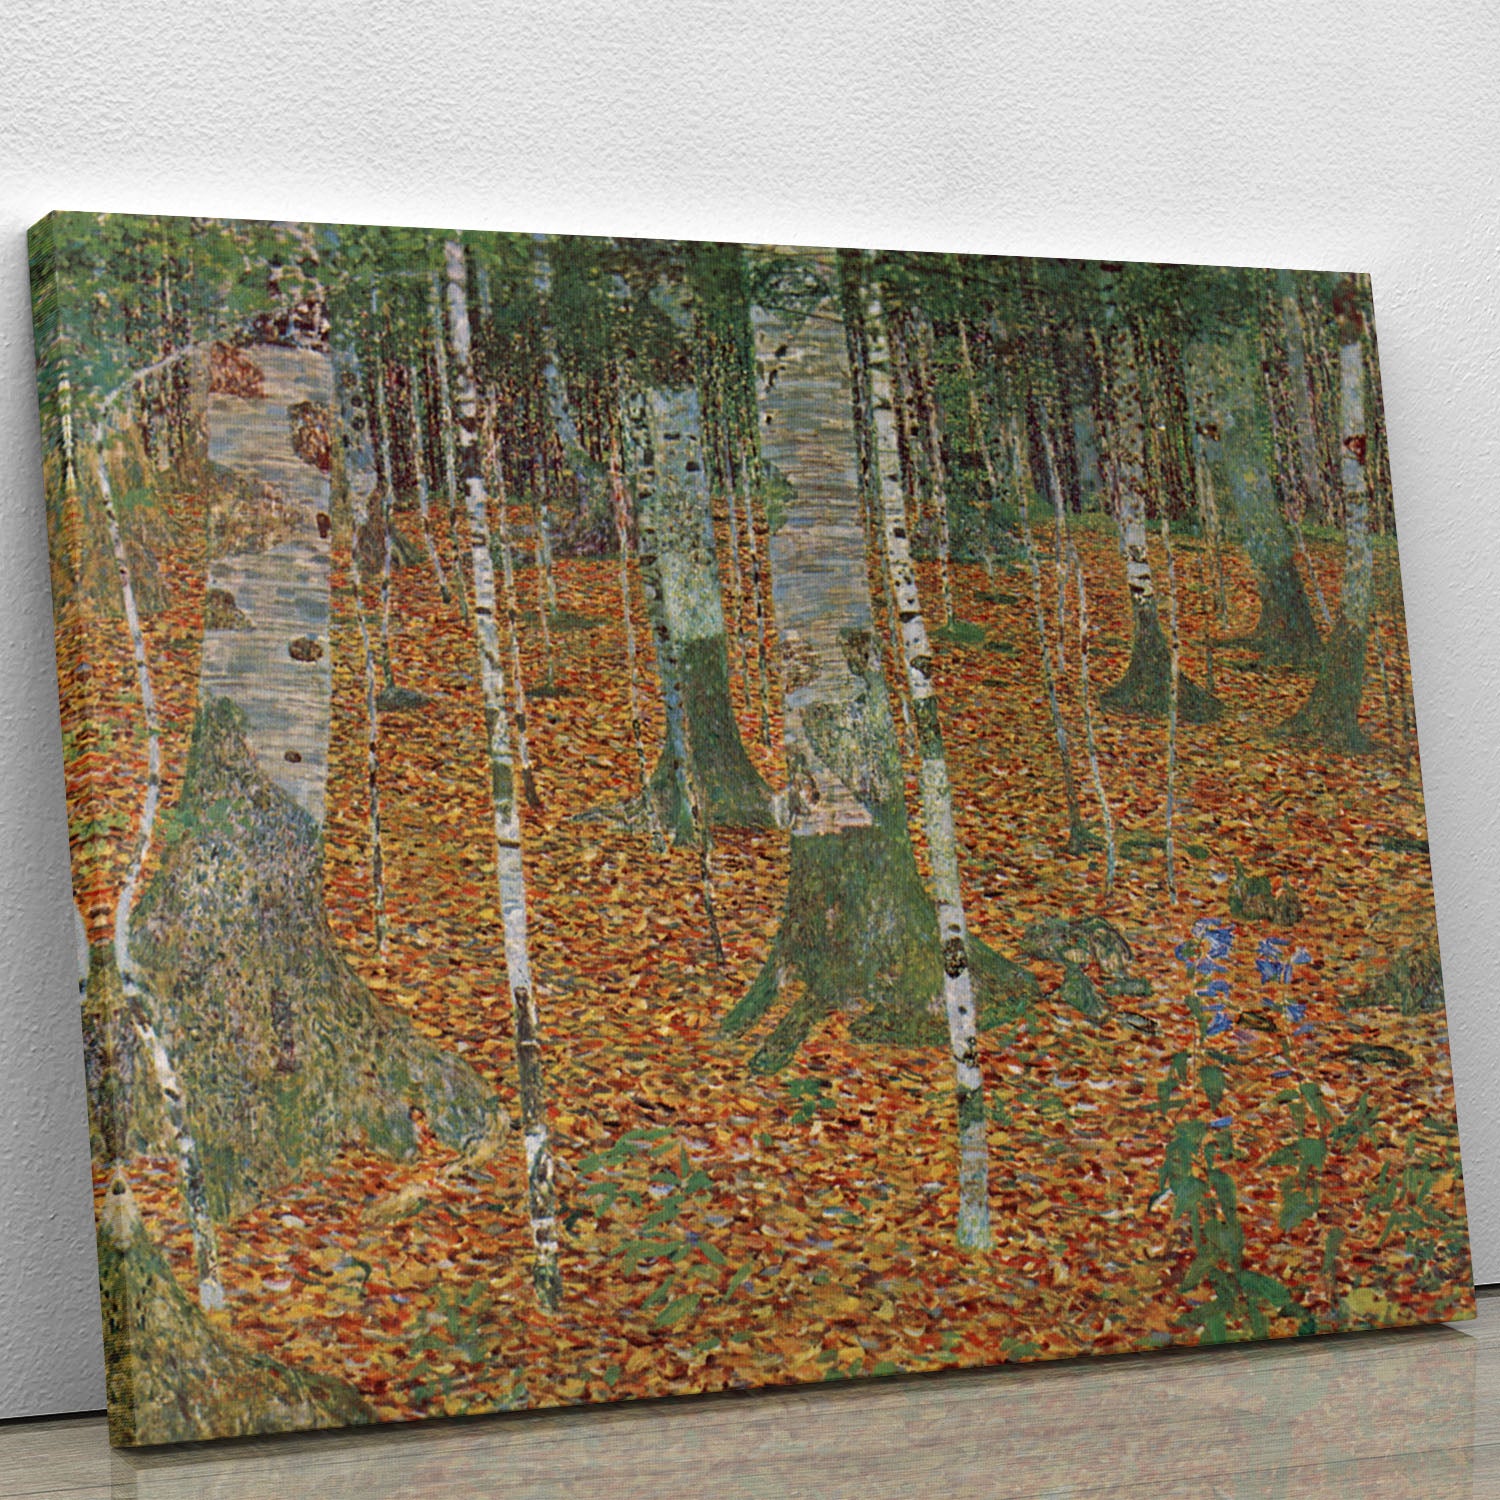 Birch Forest by Klimt Canvas Print or Poster - Canvas Art Rocks - 1